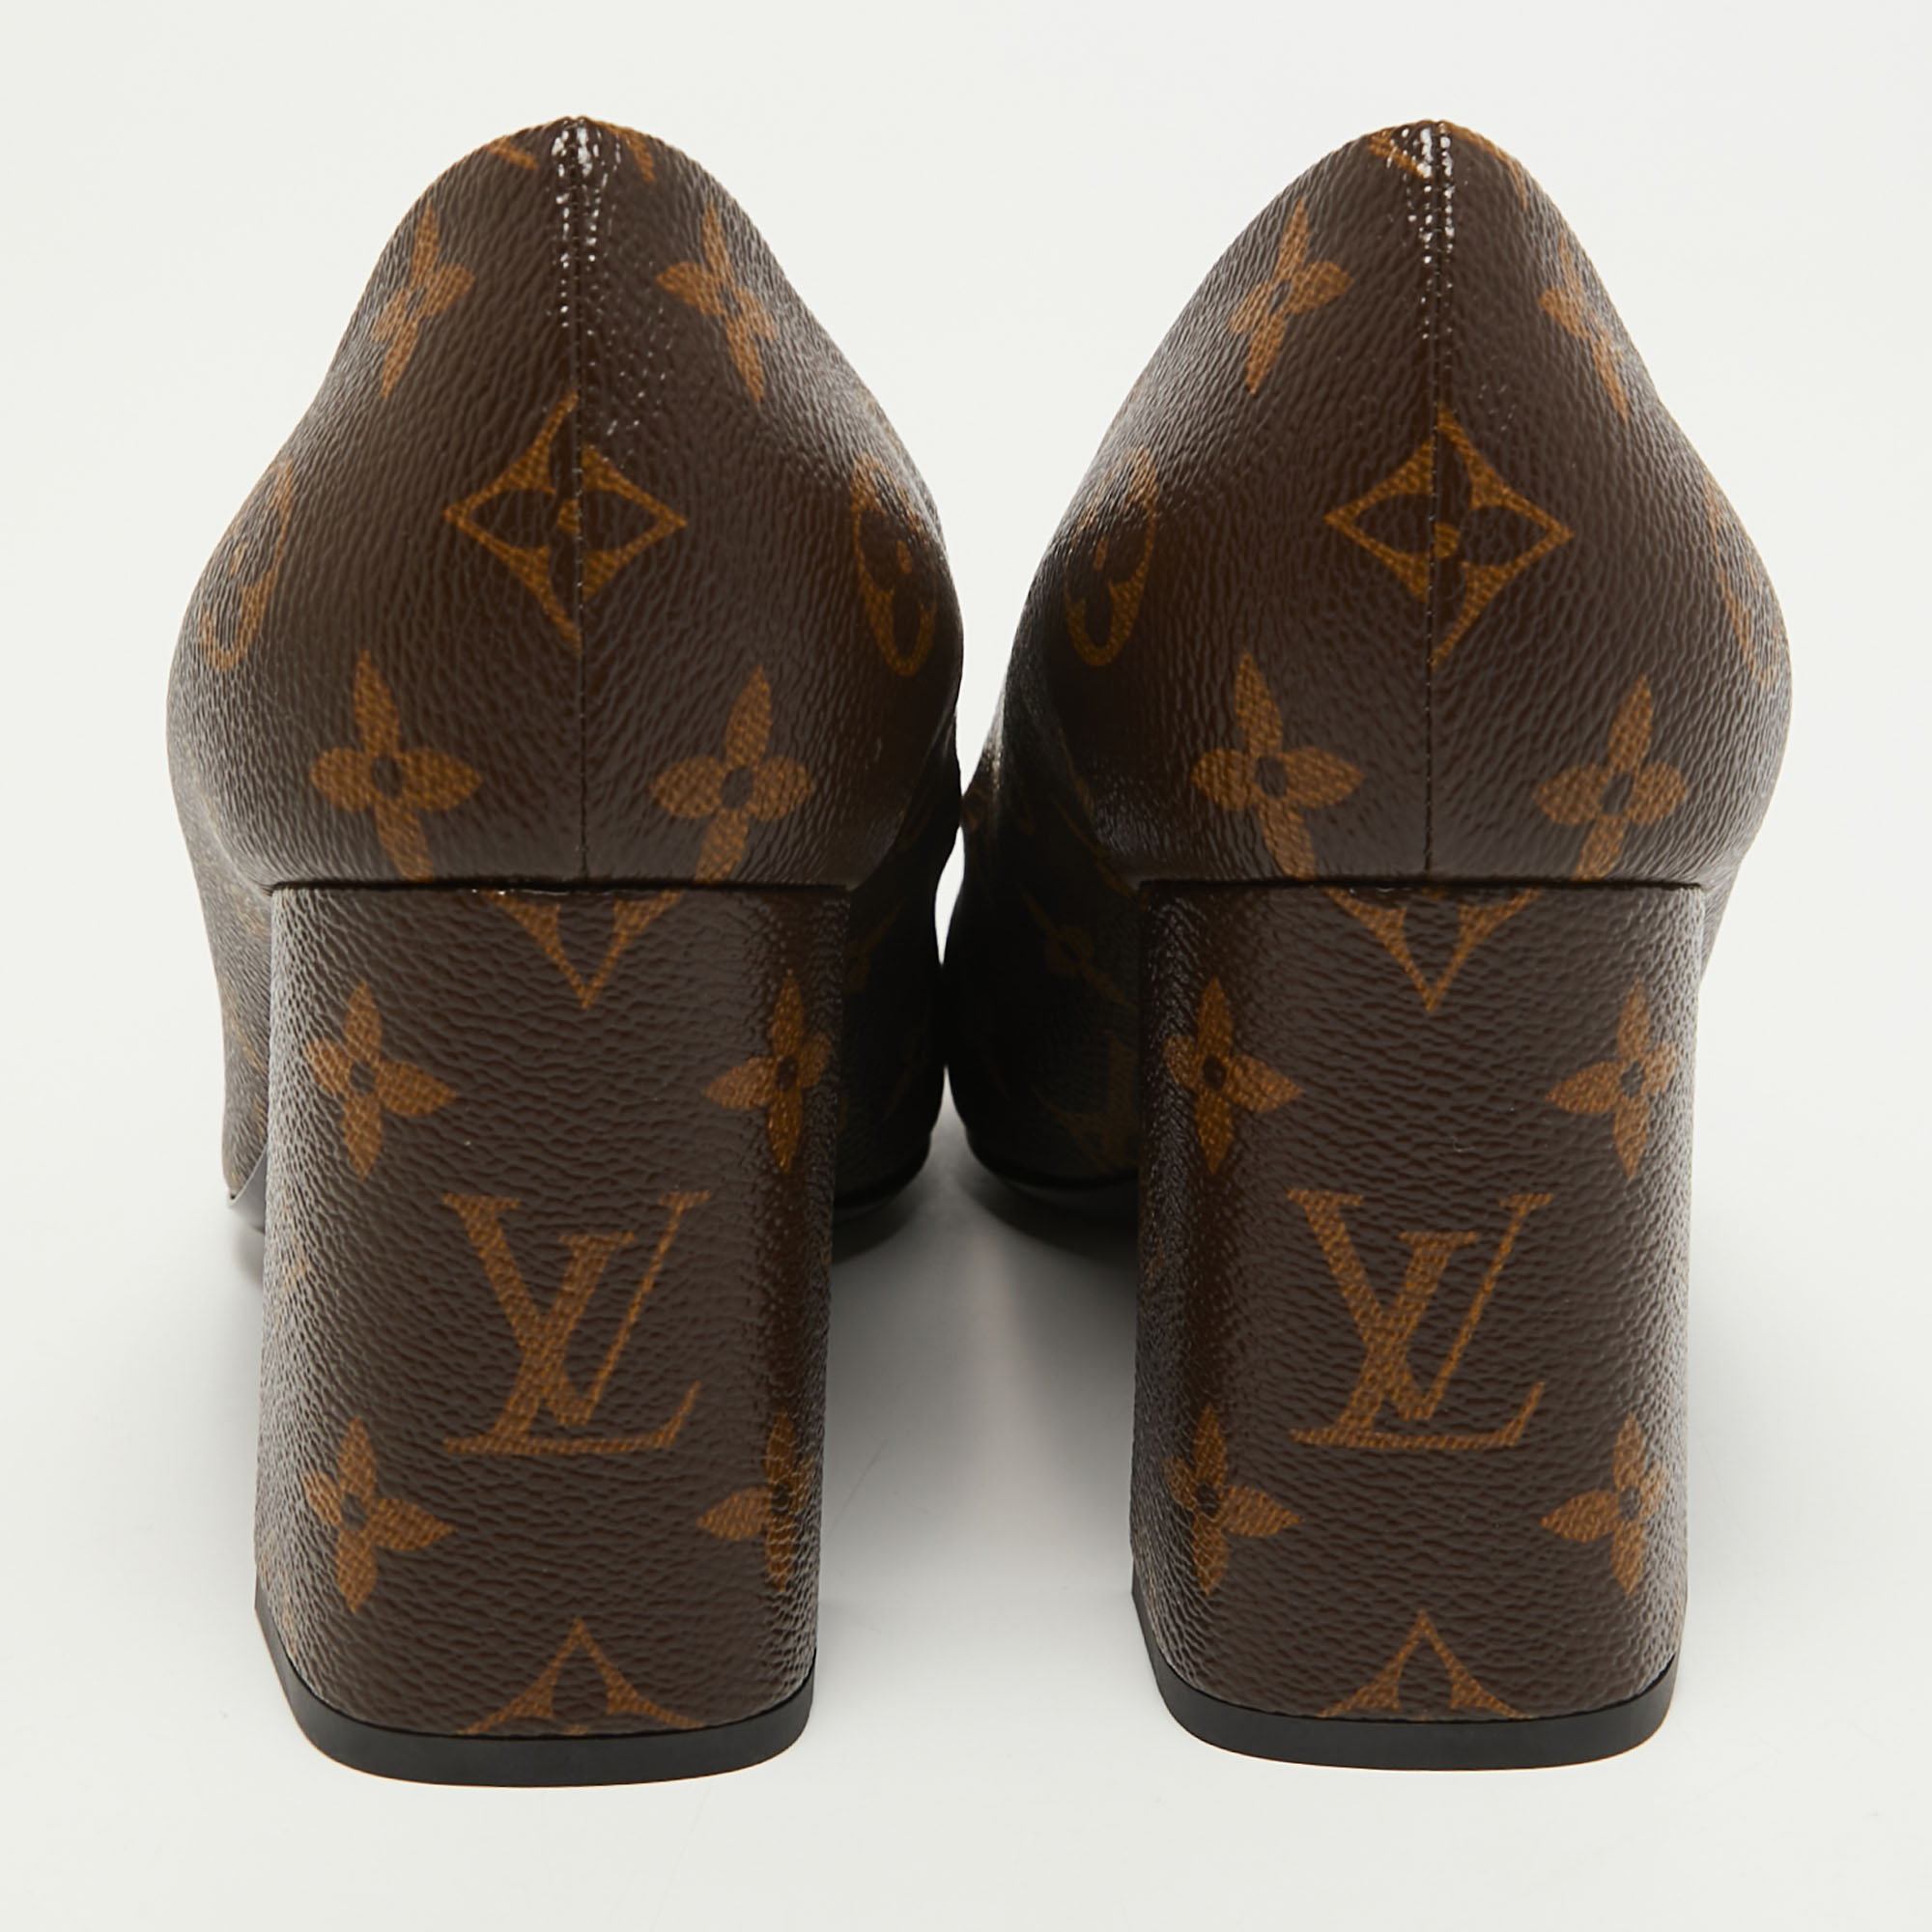 Louis Vuitton Black Patent Leather Madeleine Logo Block Heel Pumps Size 41